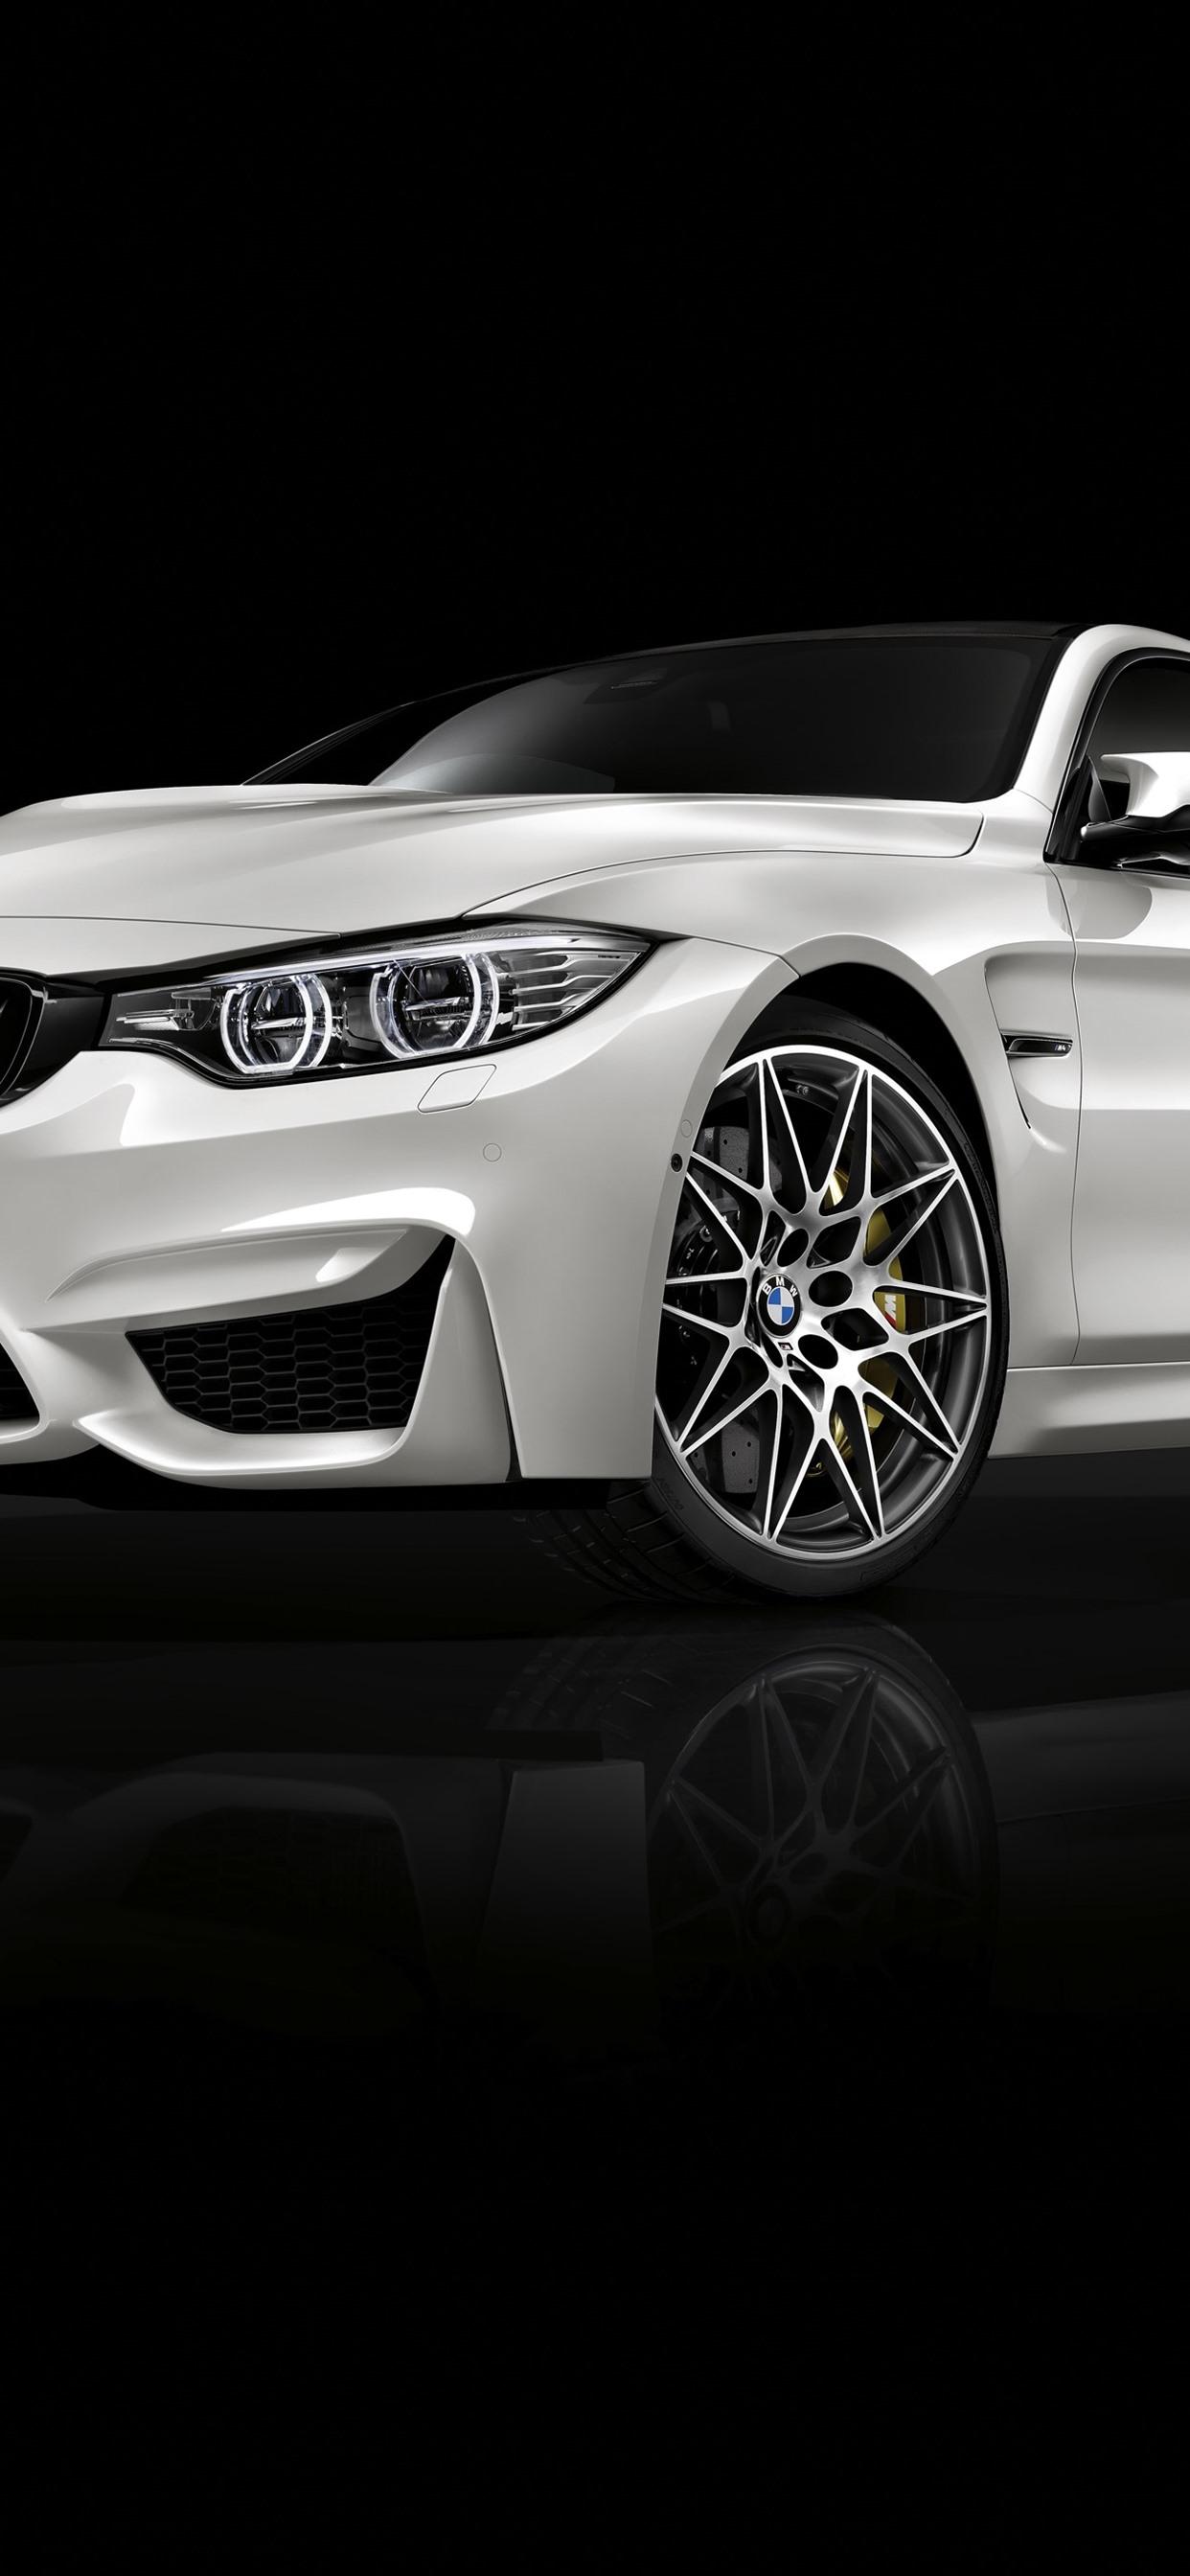 BMW M4 white car front view, black background 1242x2688